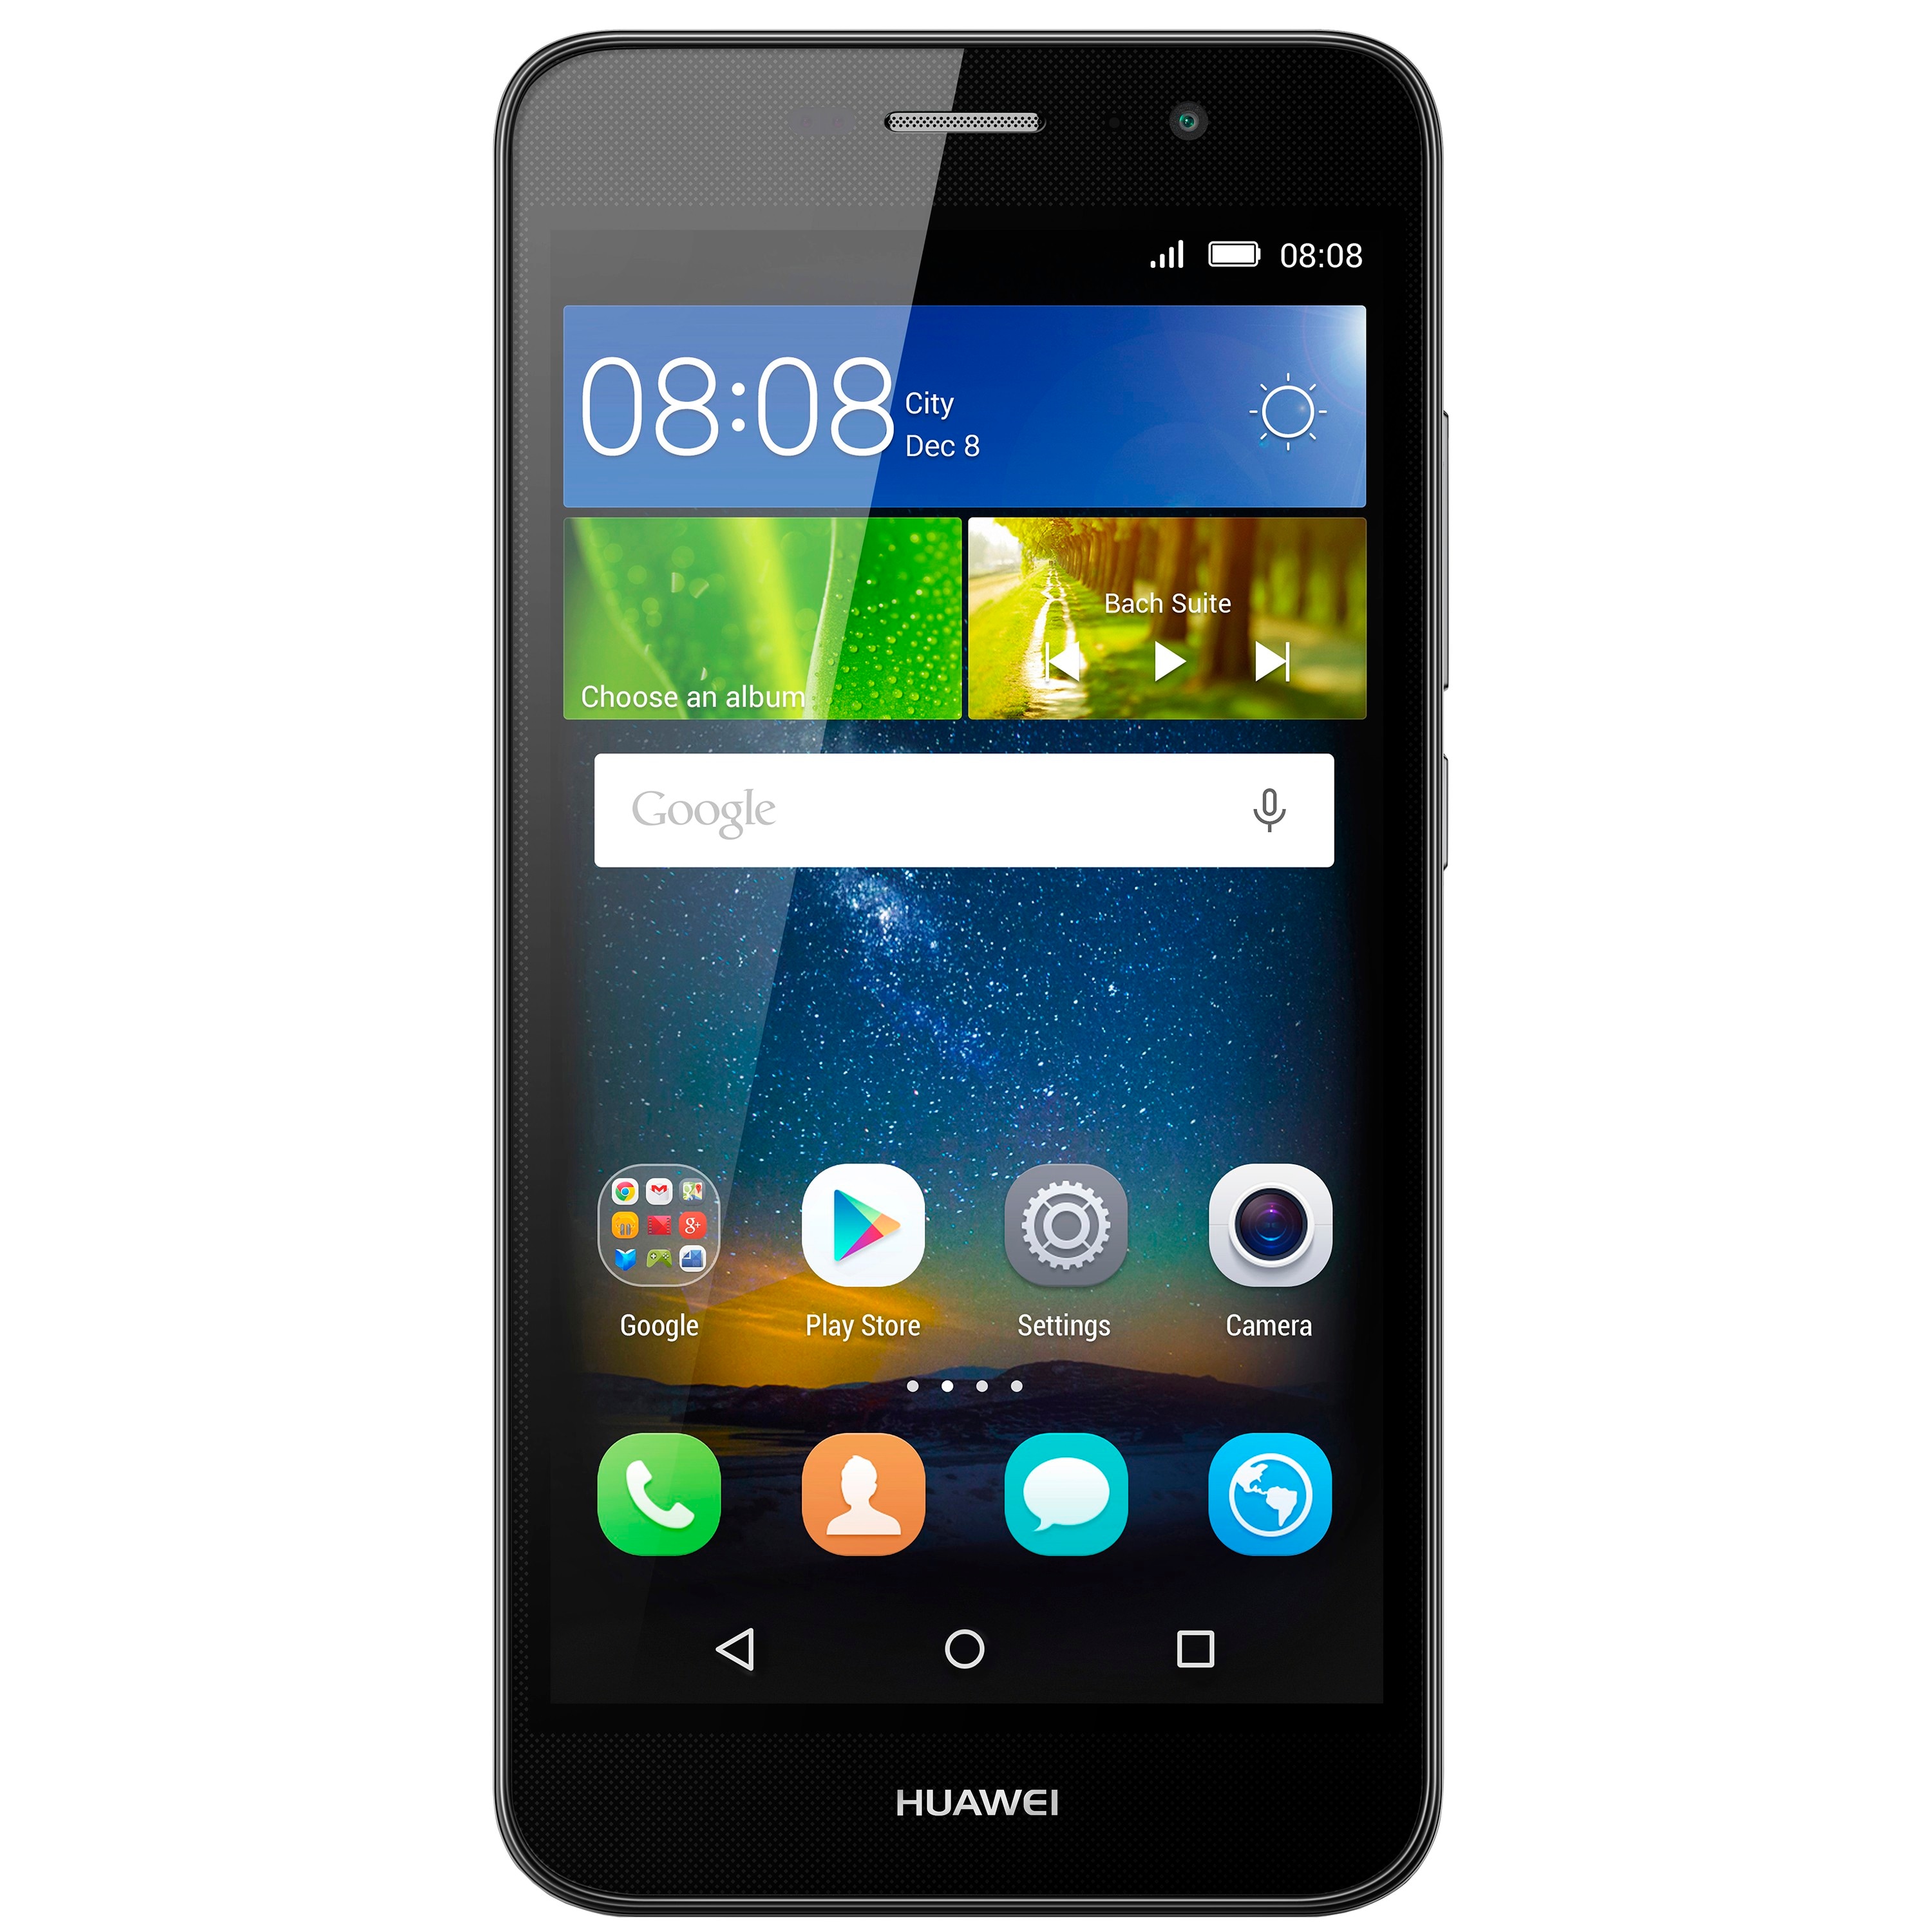 Huawei Y6 Pro dual-sim smarttelefon (sort) - Mobiltelefon - Elkjøp